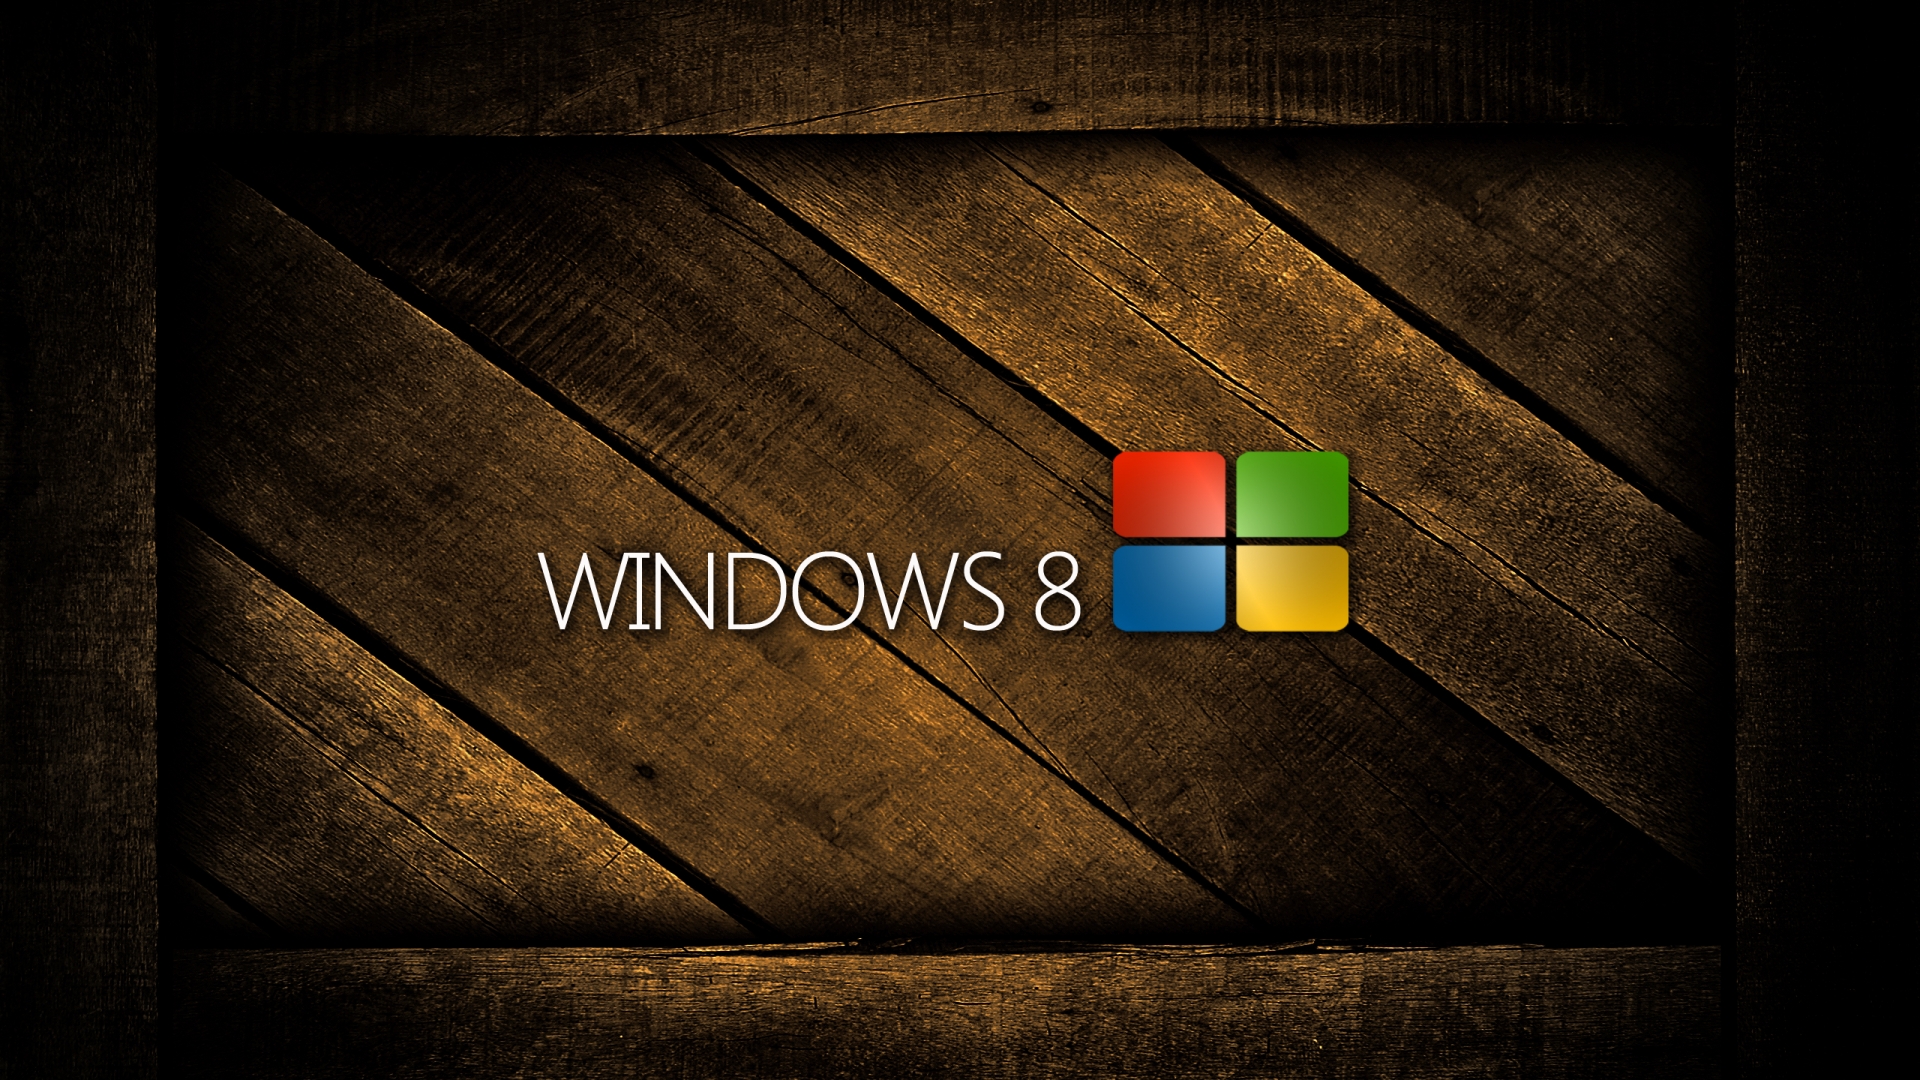 Windows 8 Wallpaper 1920X1080 wallpaper   663354